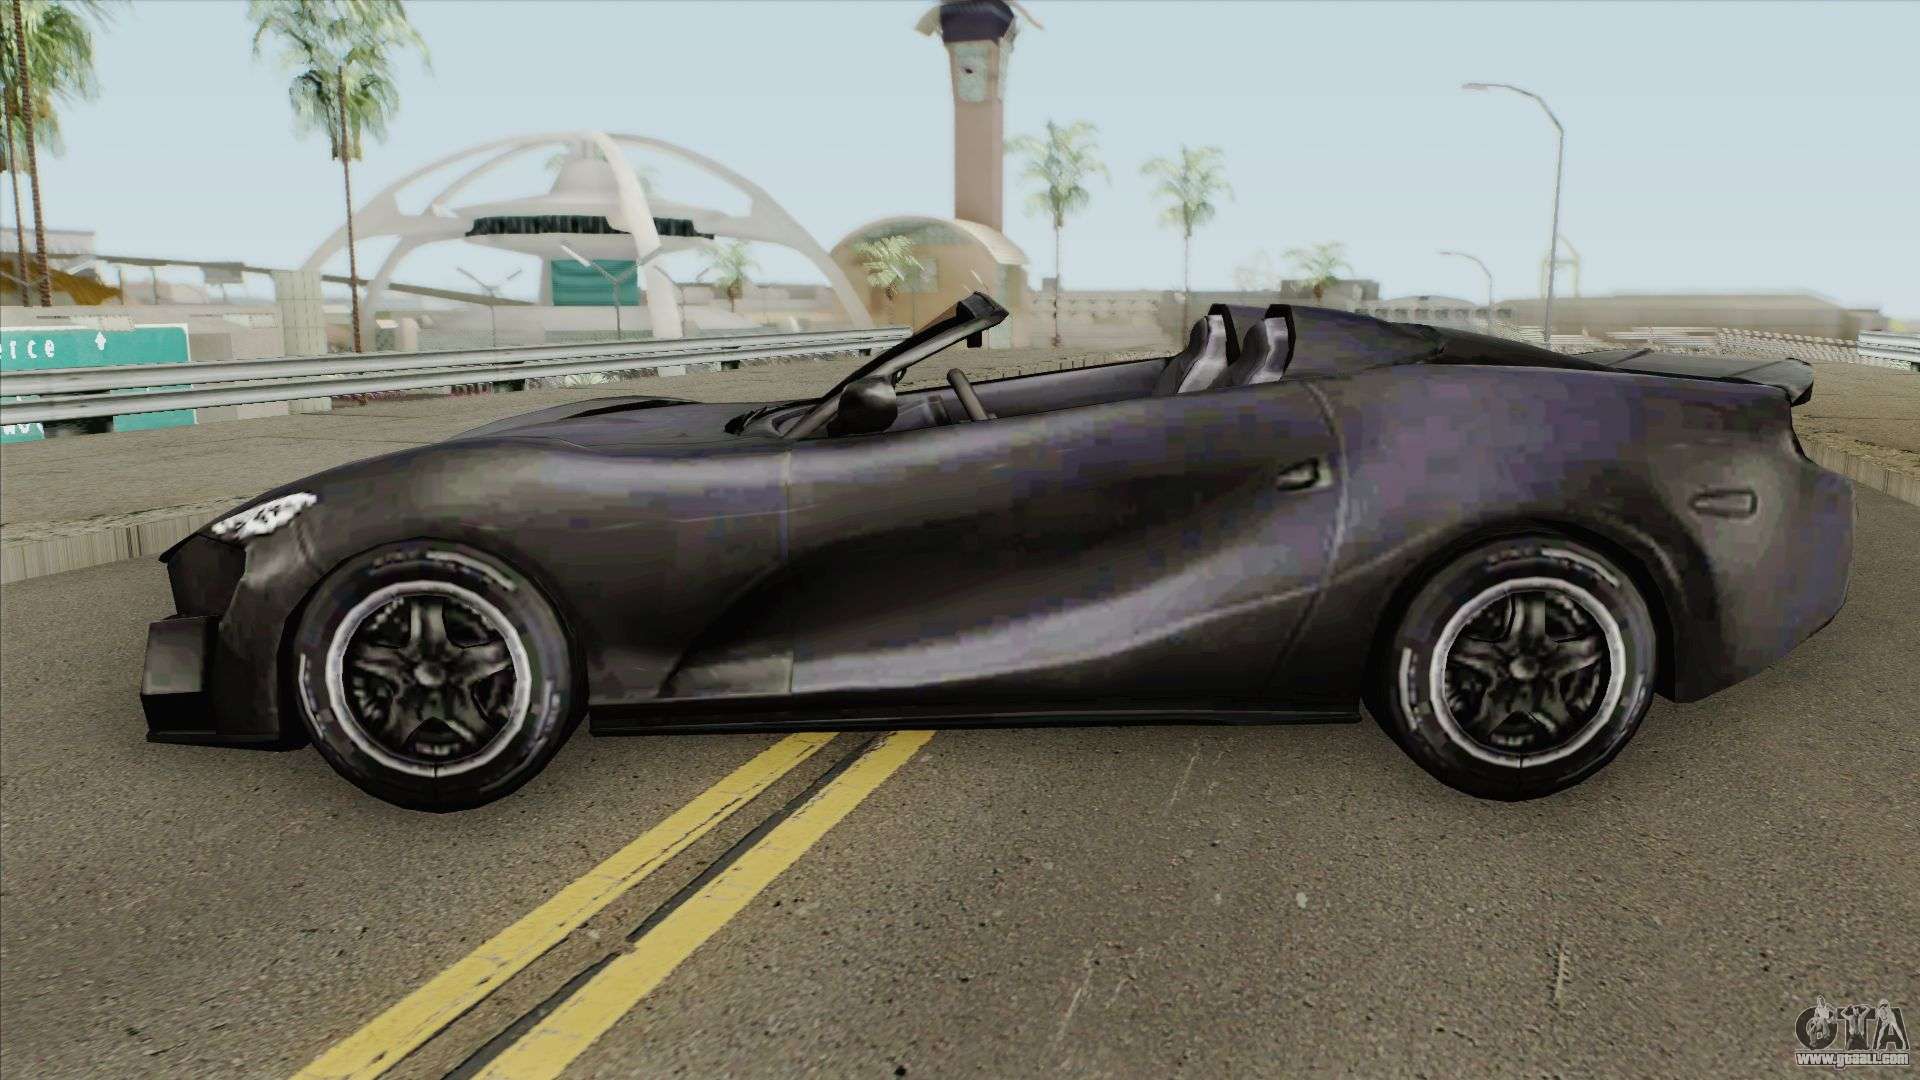 Sport Car (Free Fire) for GTA San Andreas